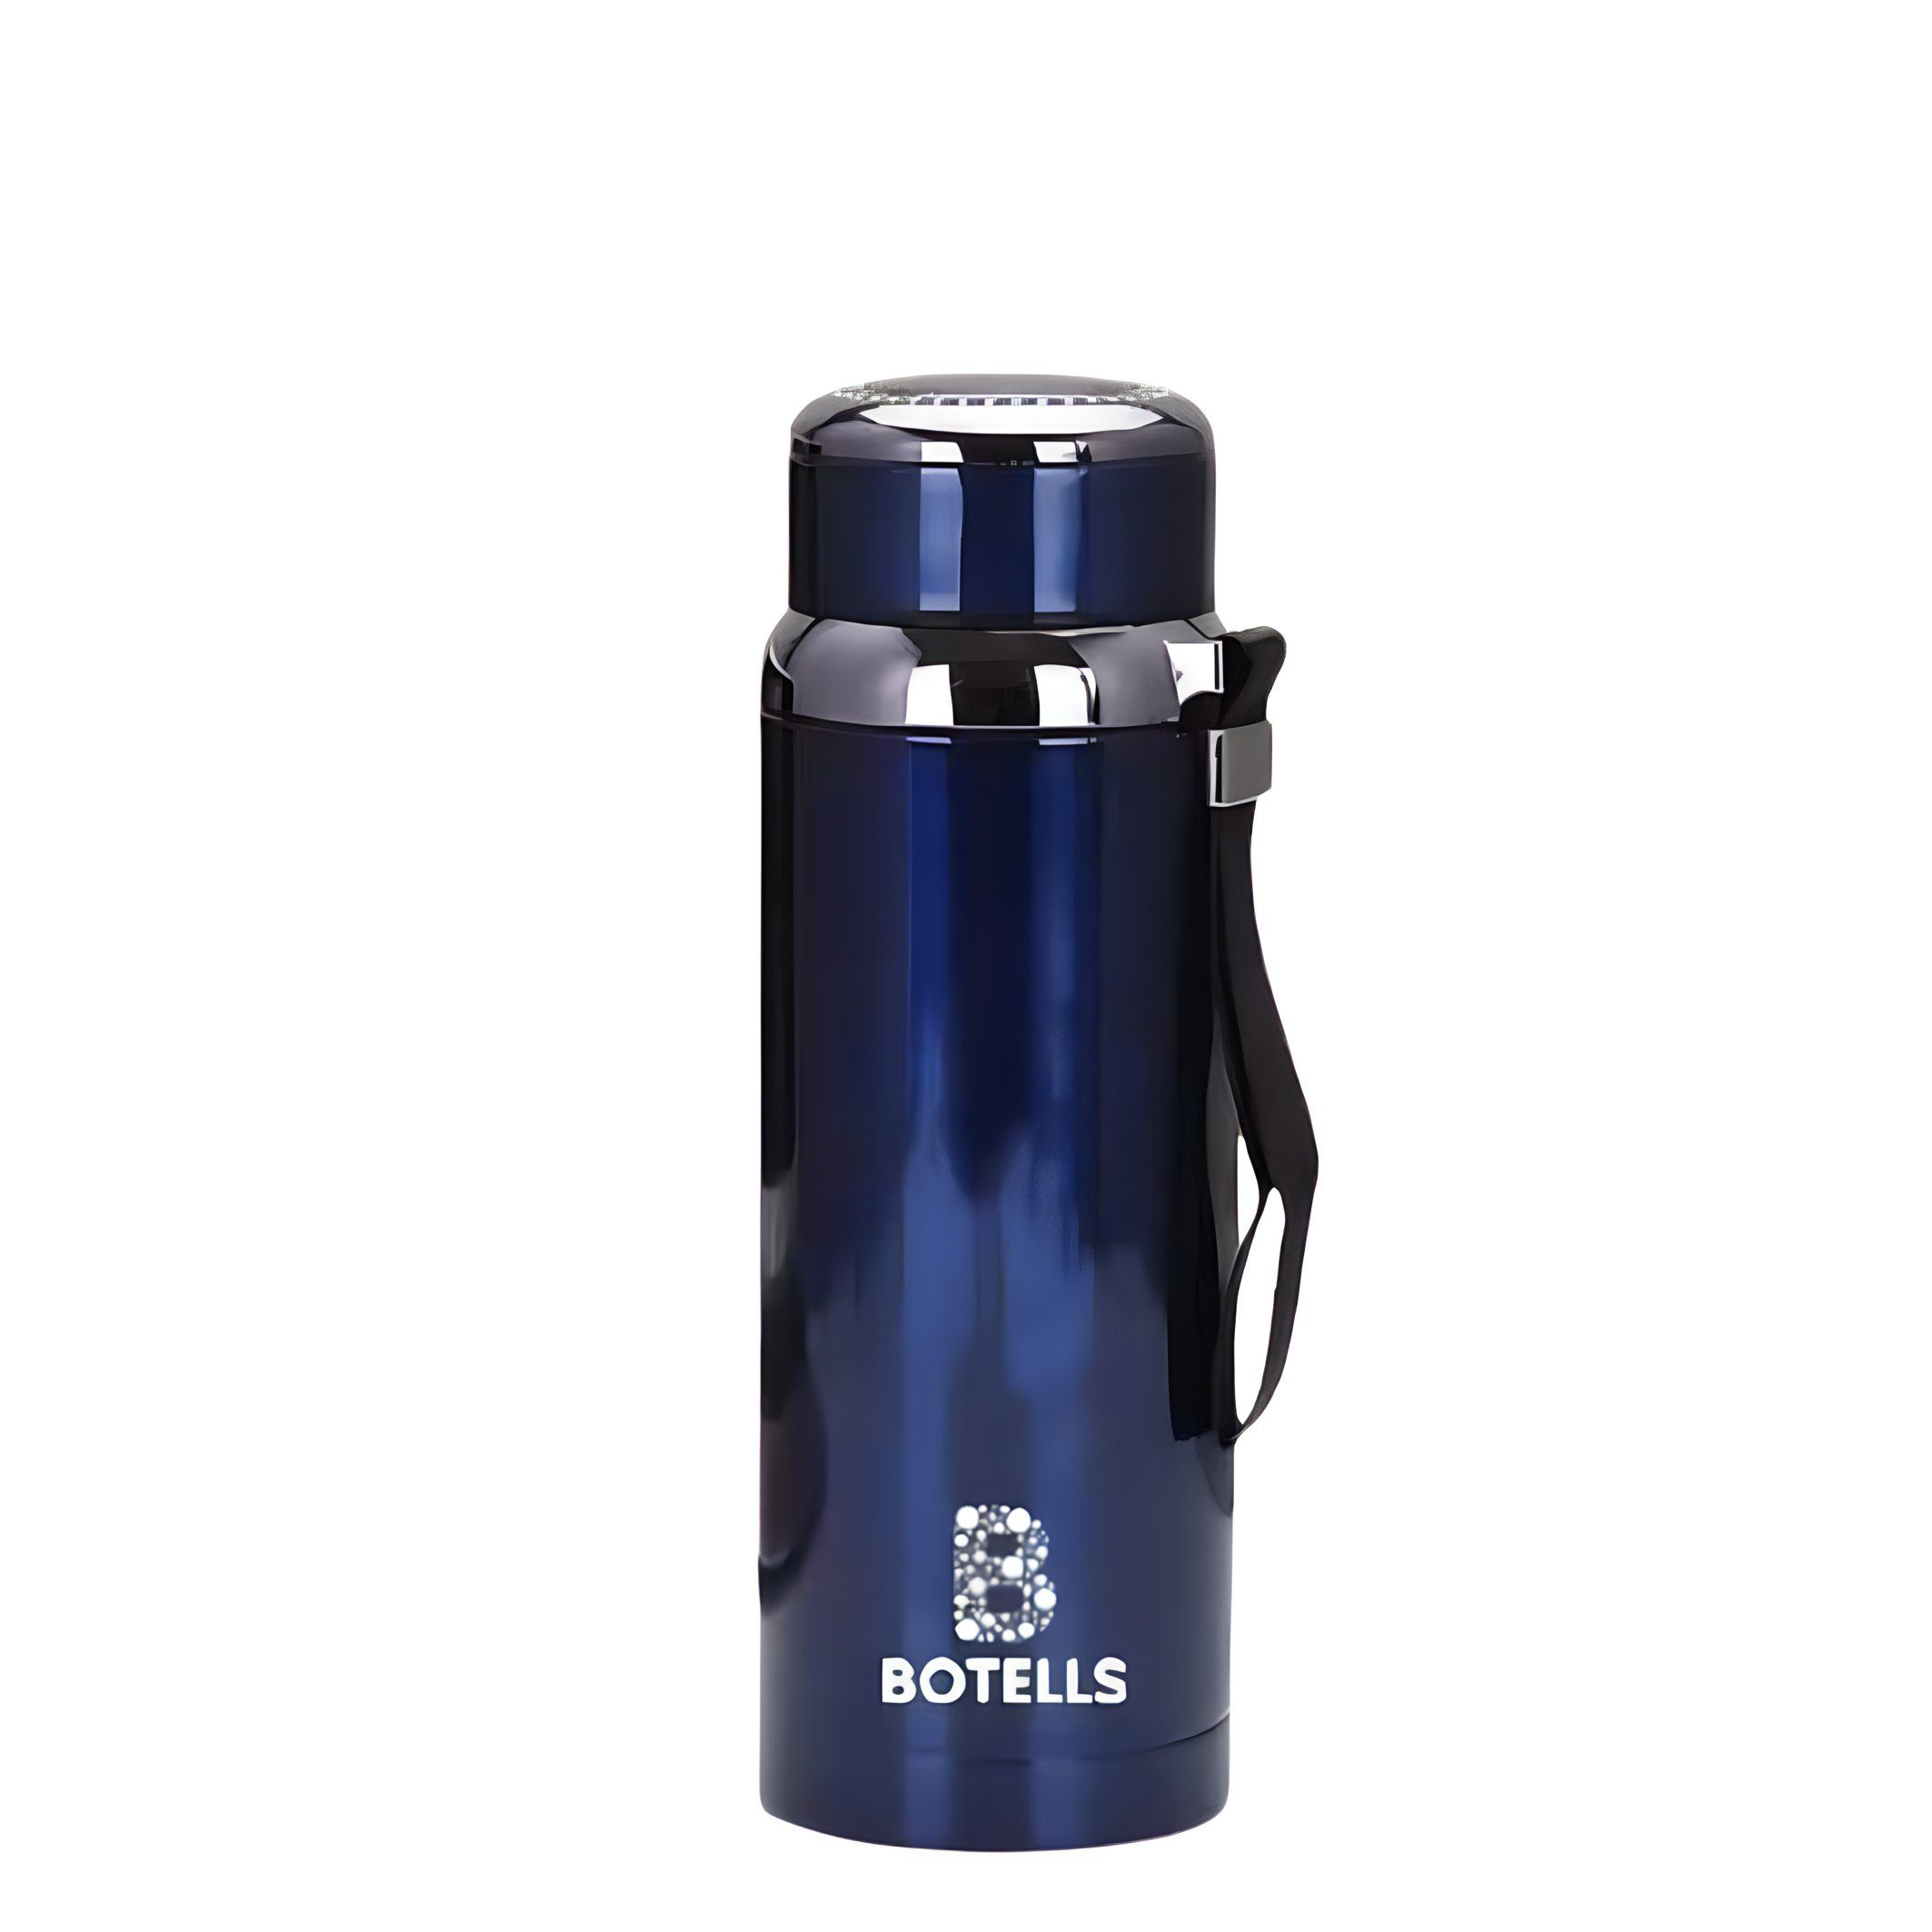 Botells Thermoflasche Iso Kanne Edelstahl 0,8 L, Tee, Kaffee, heiß & kalt, auslaufsicher, metallic Design, lebensmittelecht, auslaufsicher, doppelwandig, 800 ml